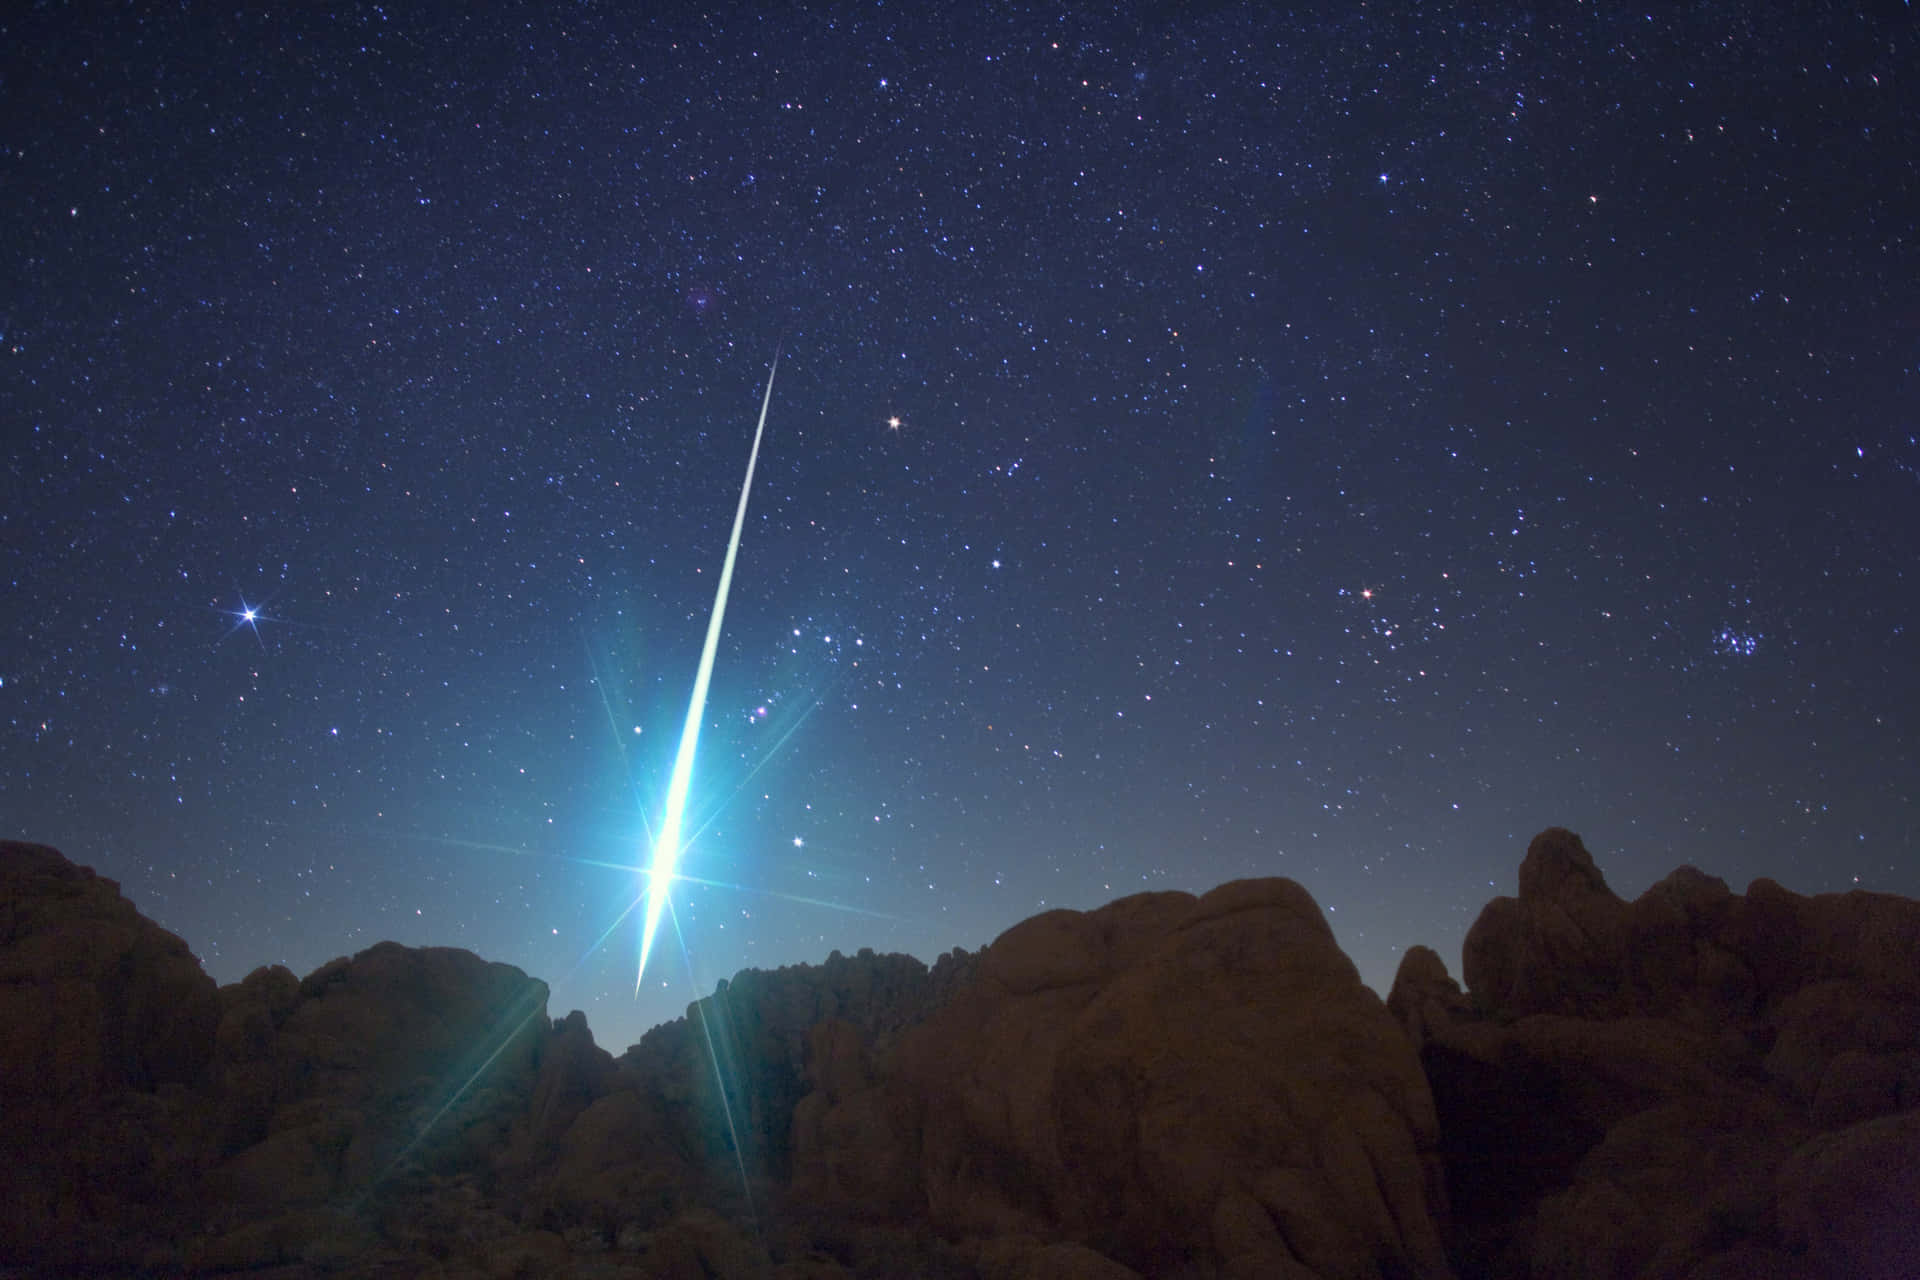 A bright meteor streaks across the night sky